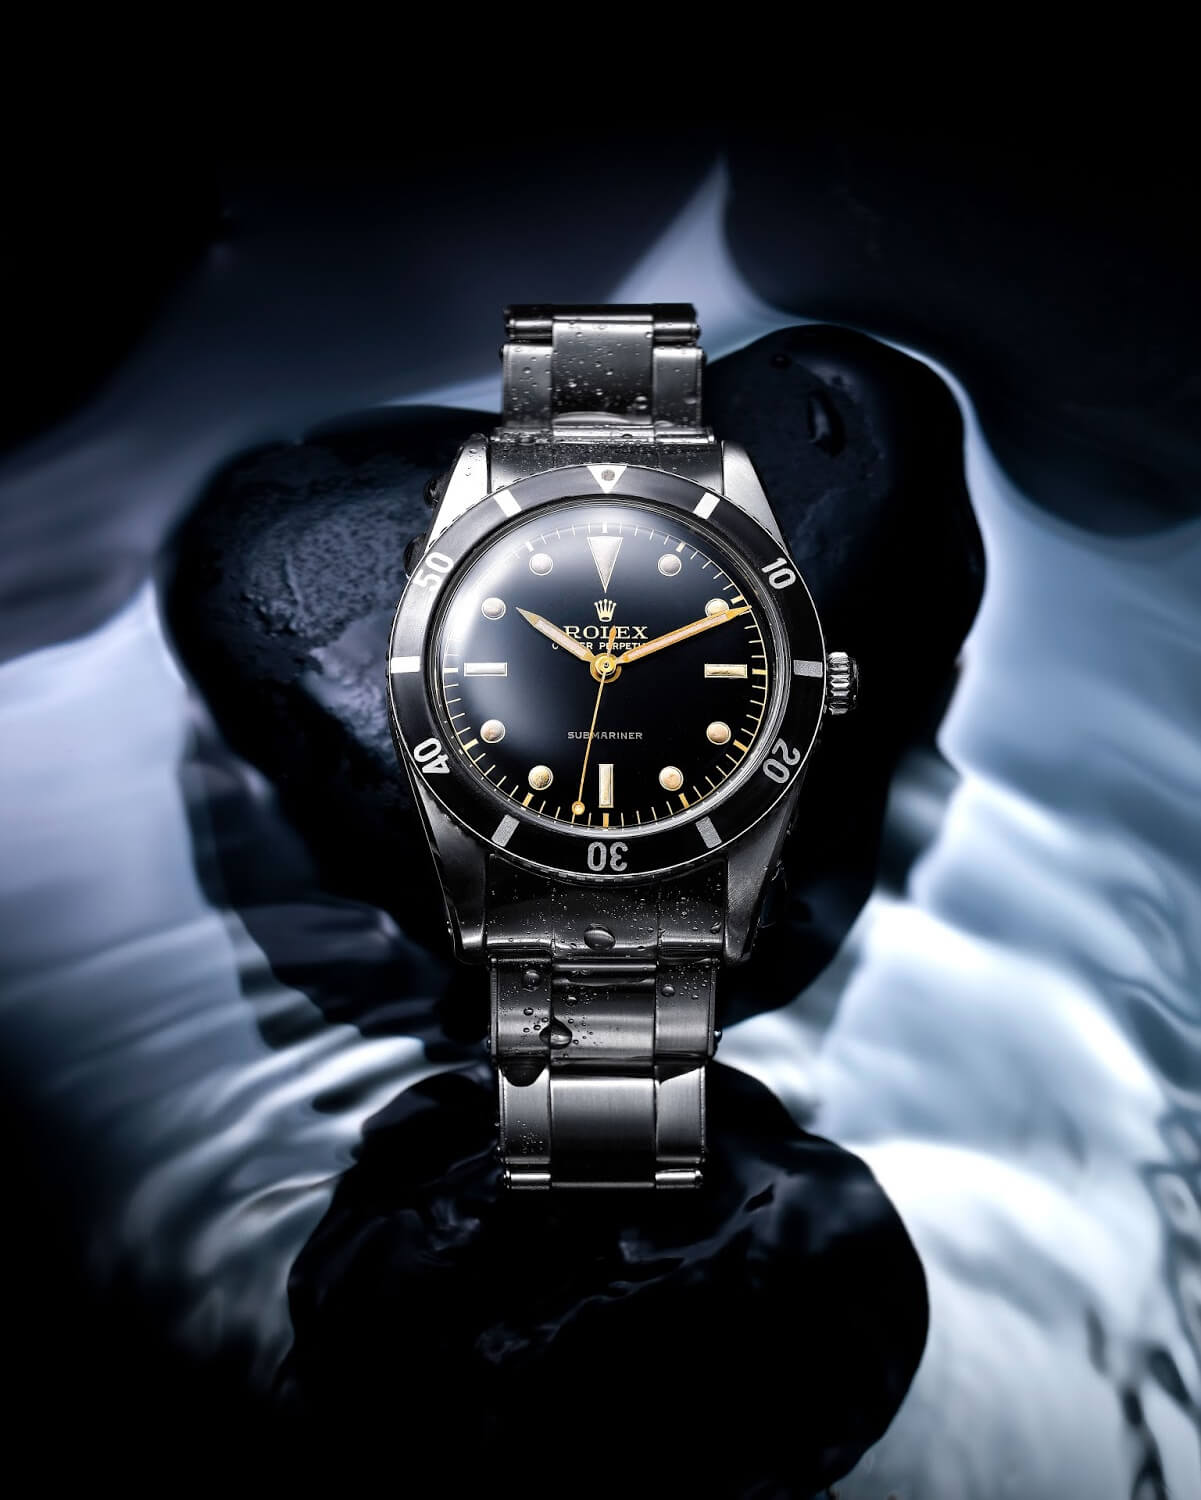 1953 Rolex Submariner diving watch prototype